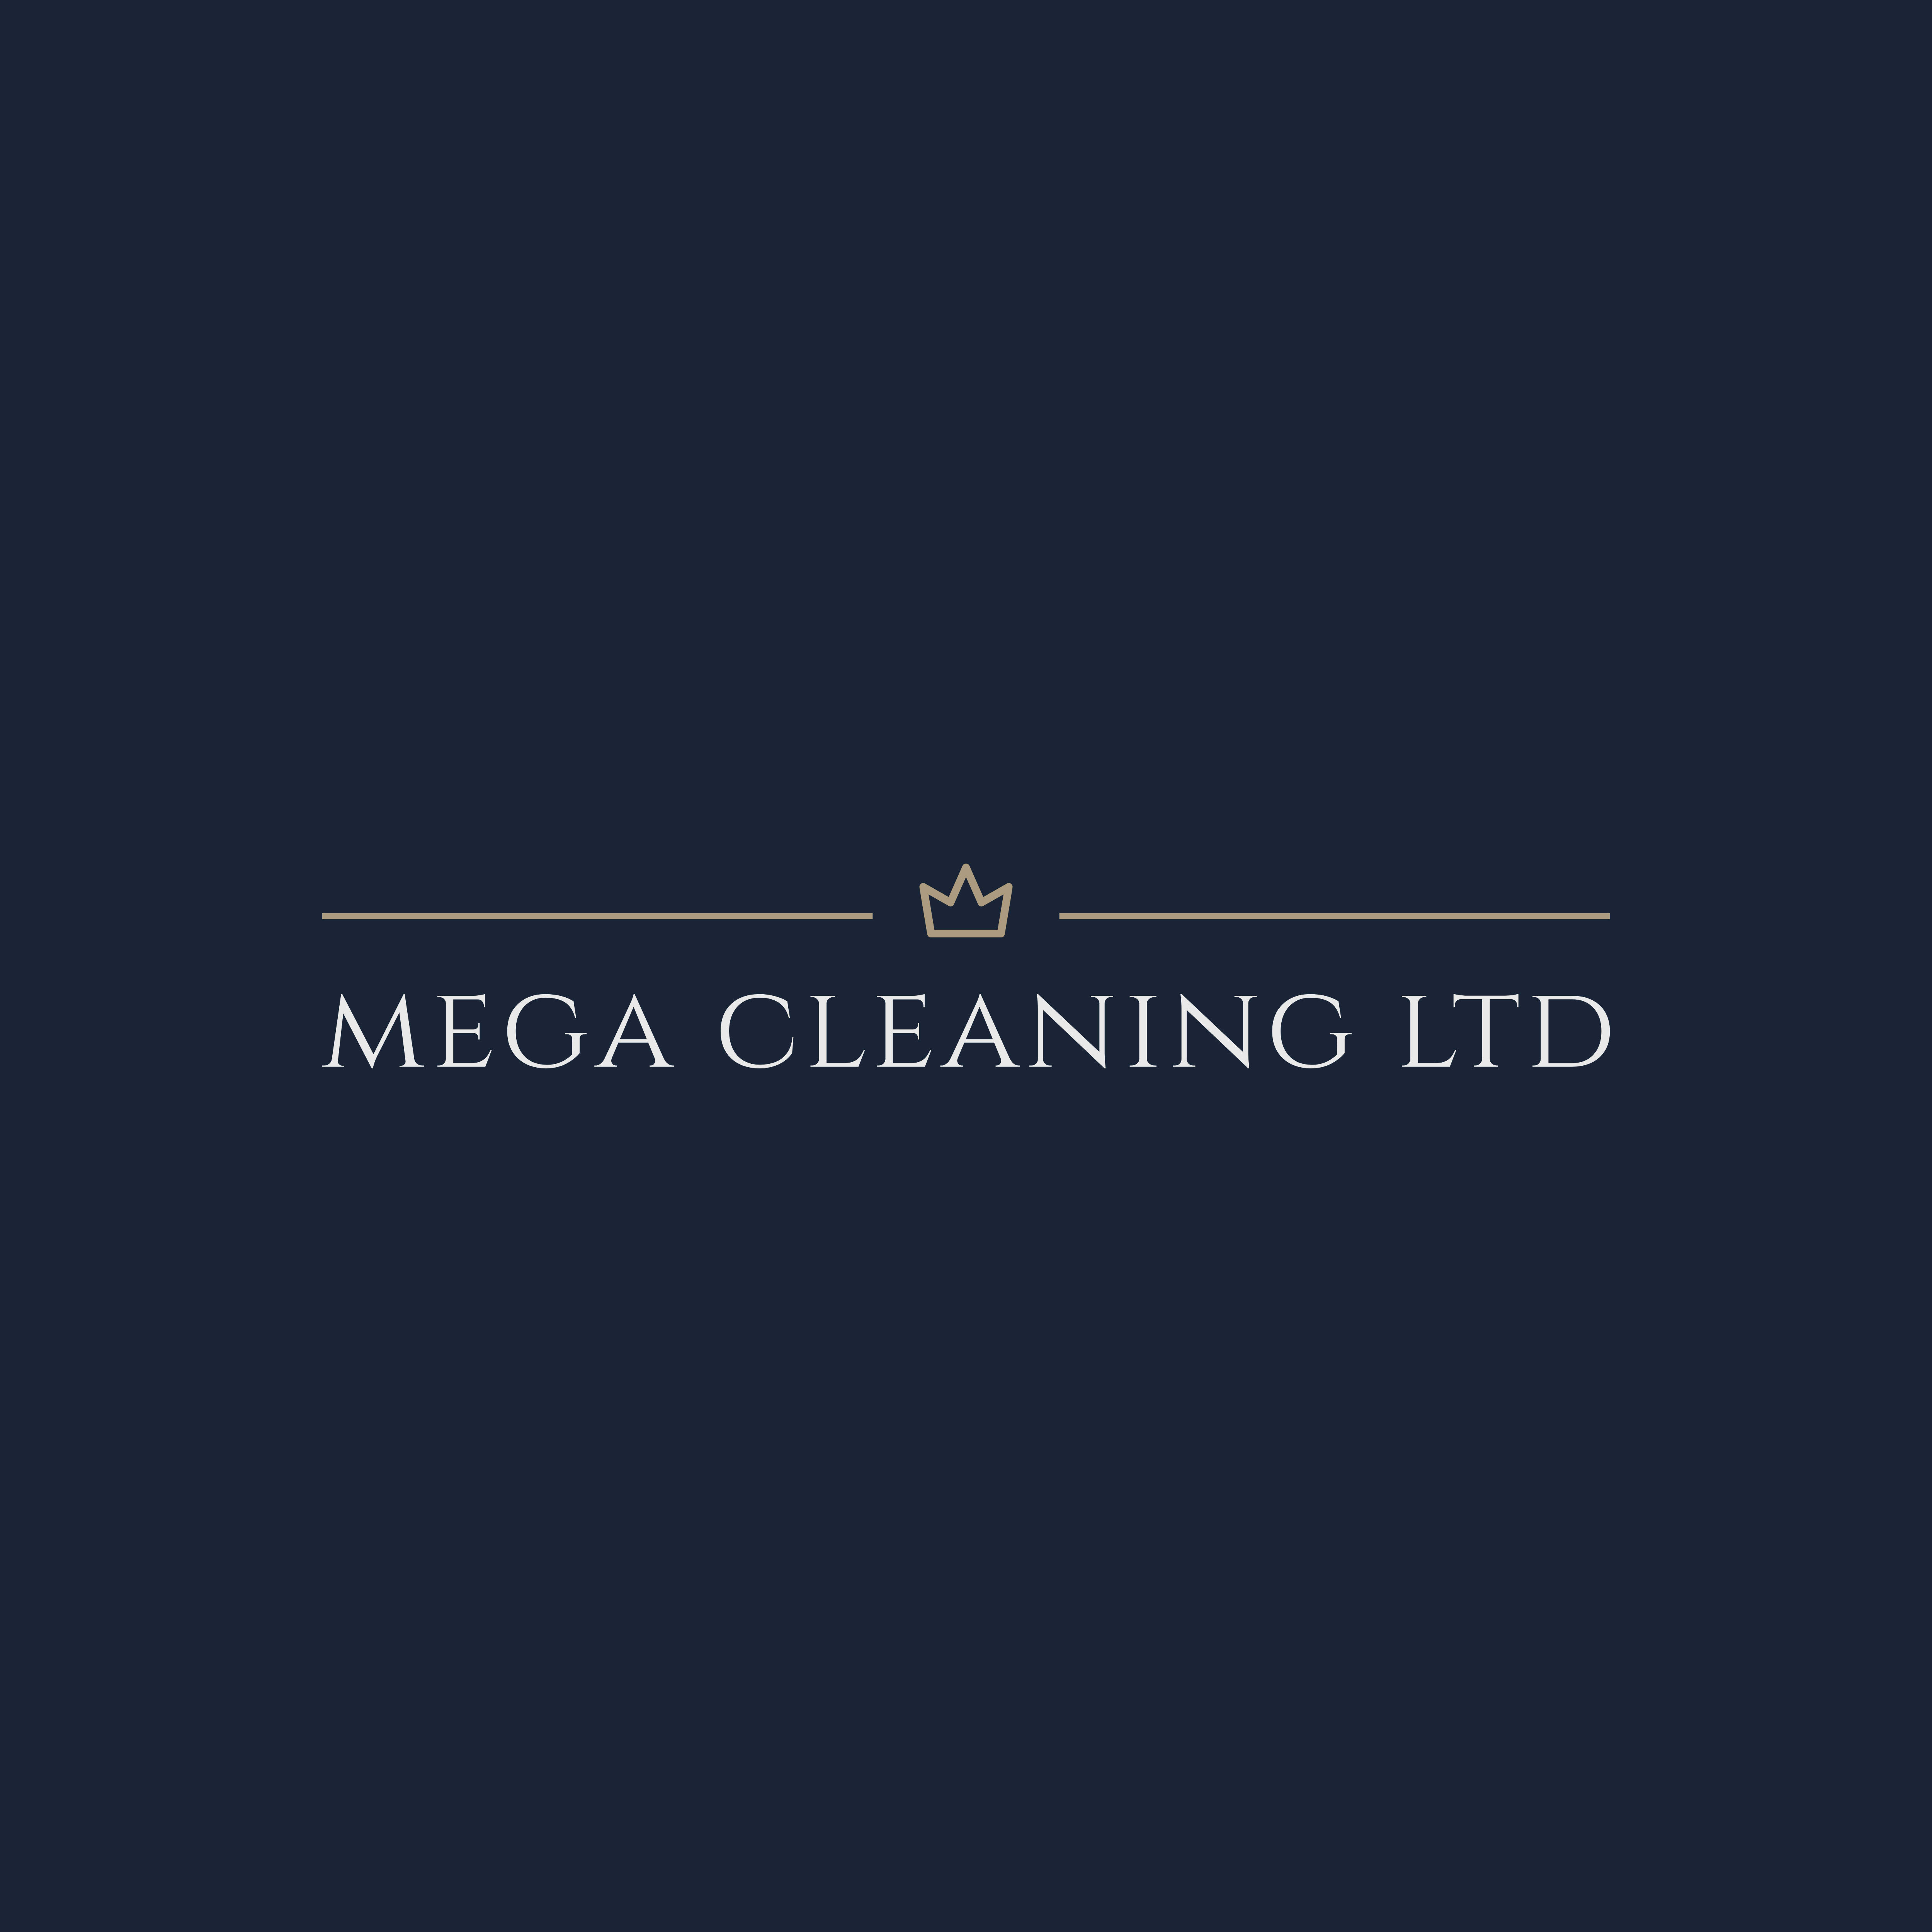 Mega Cleaning Ltd